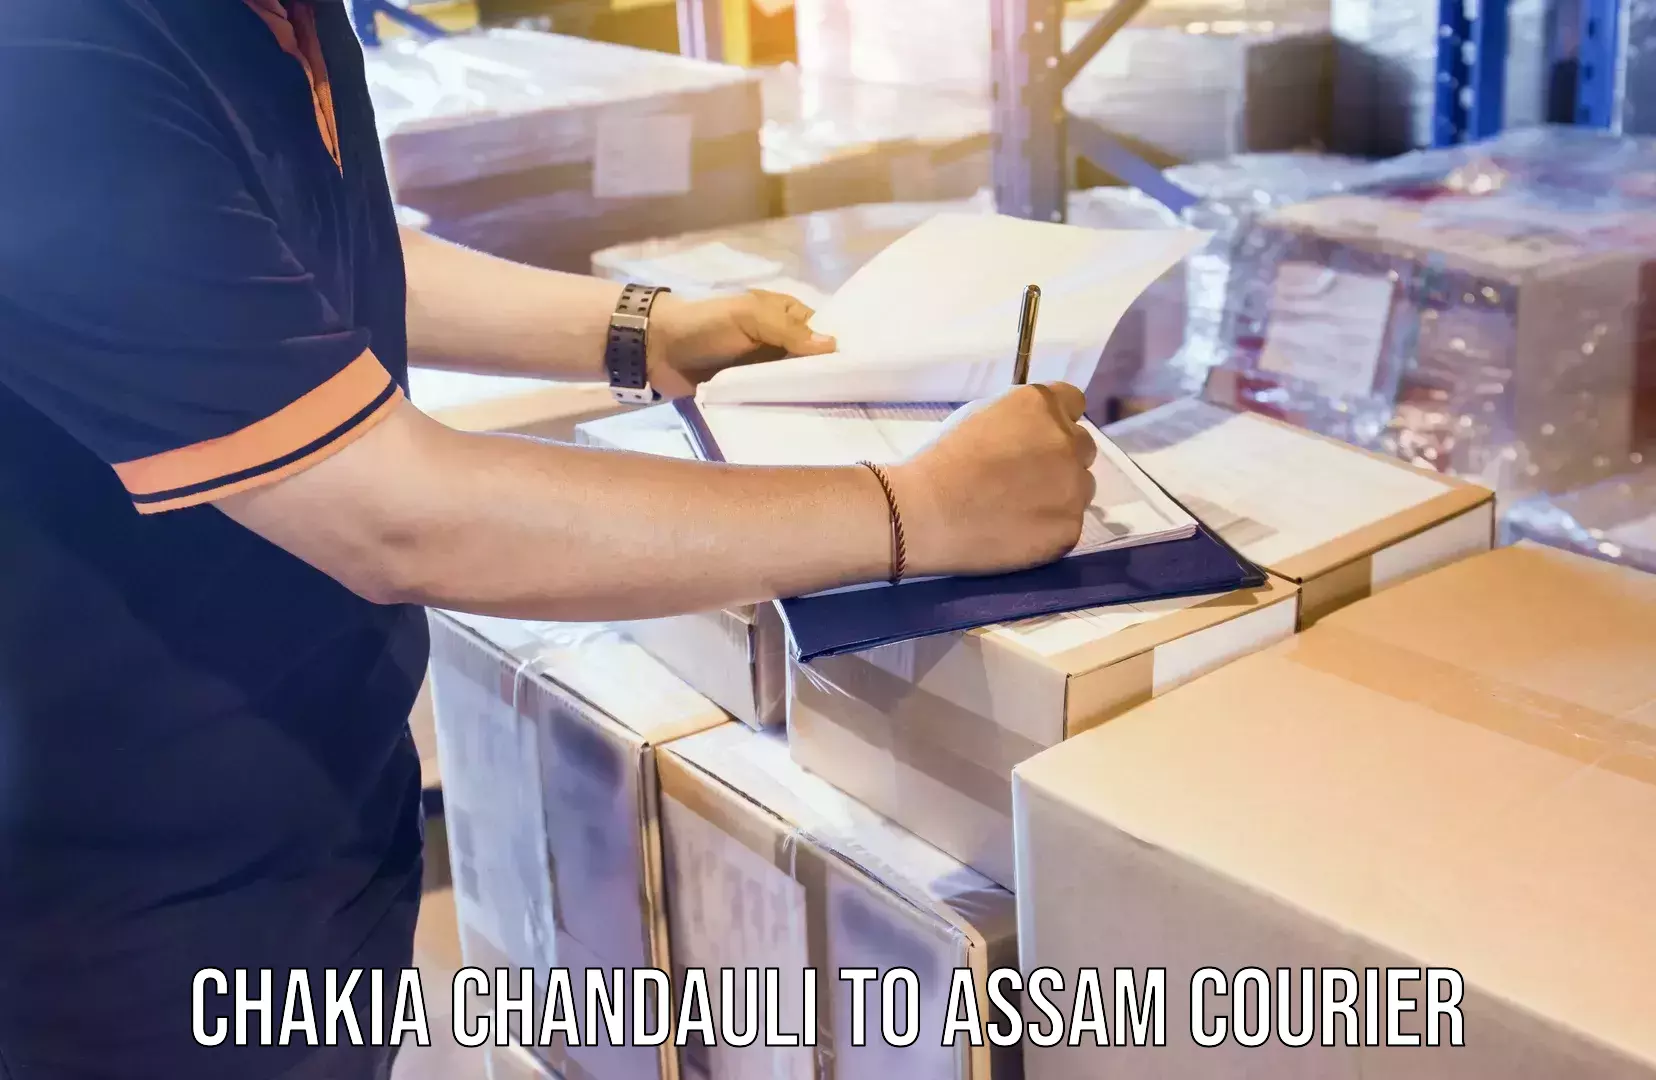 Courier service partnerships Chakia Chandauli to Assam